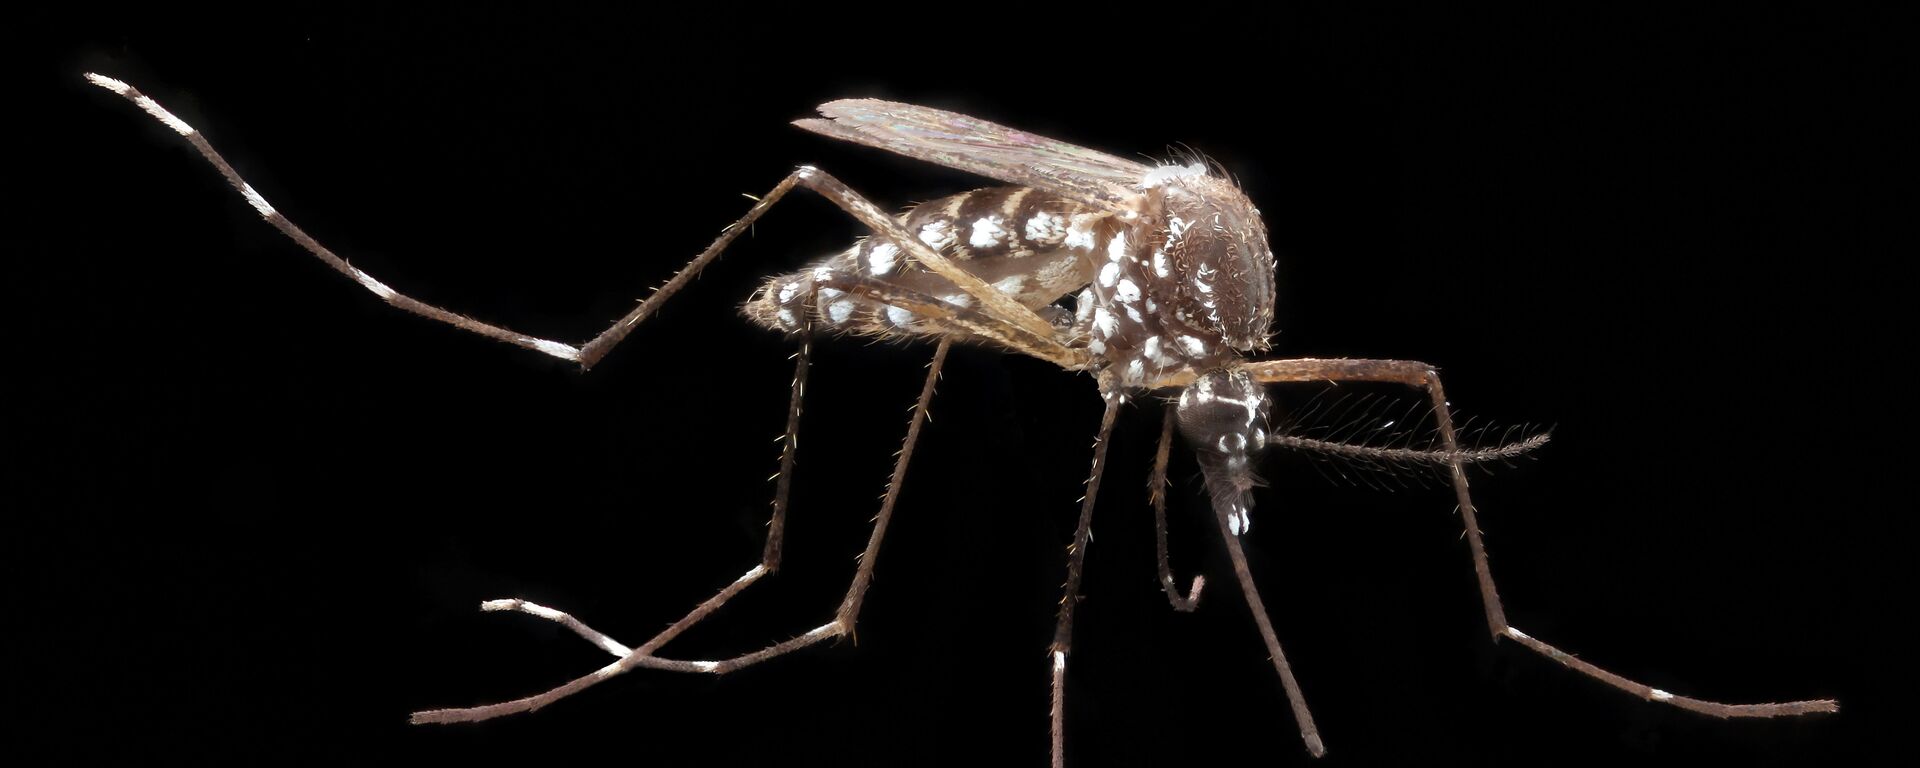 Aedes aegypti, el mosquito de la fiebre amarilla - Sputnik Mundo, 1920, 03.11.2021